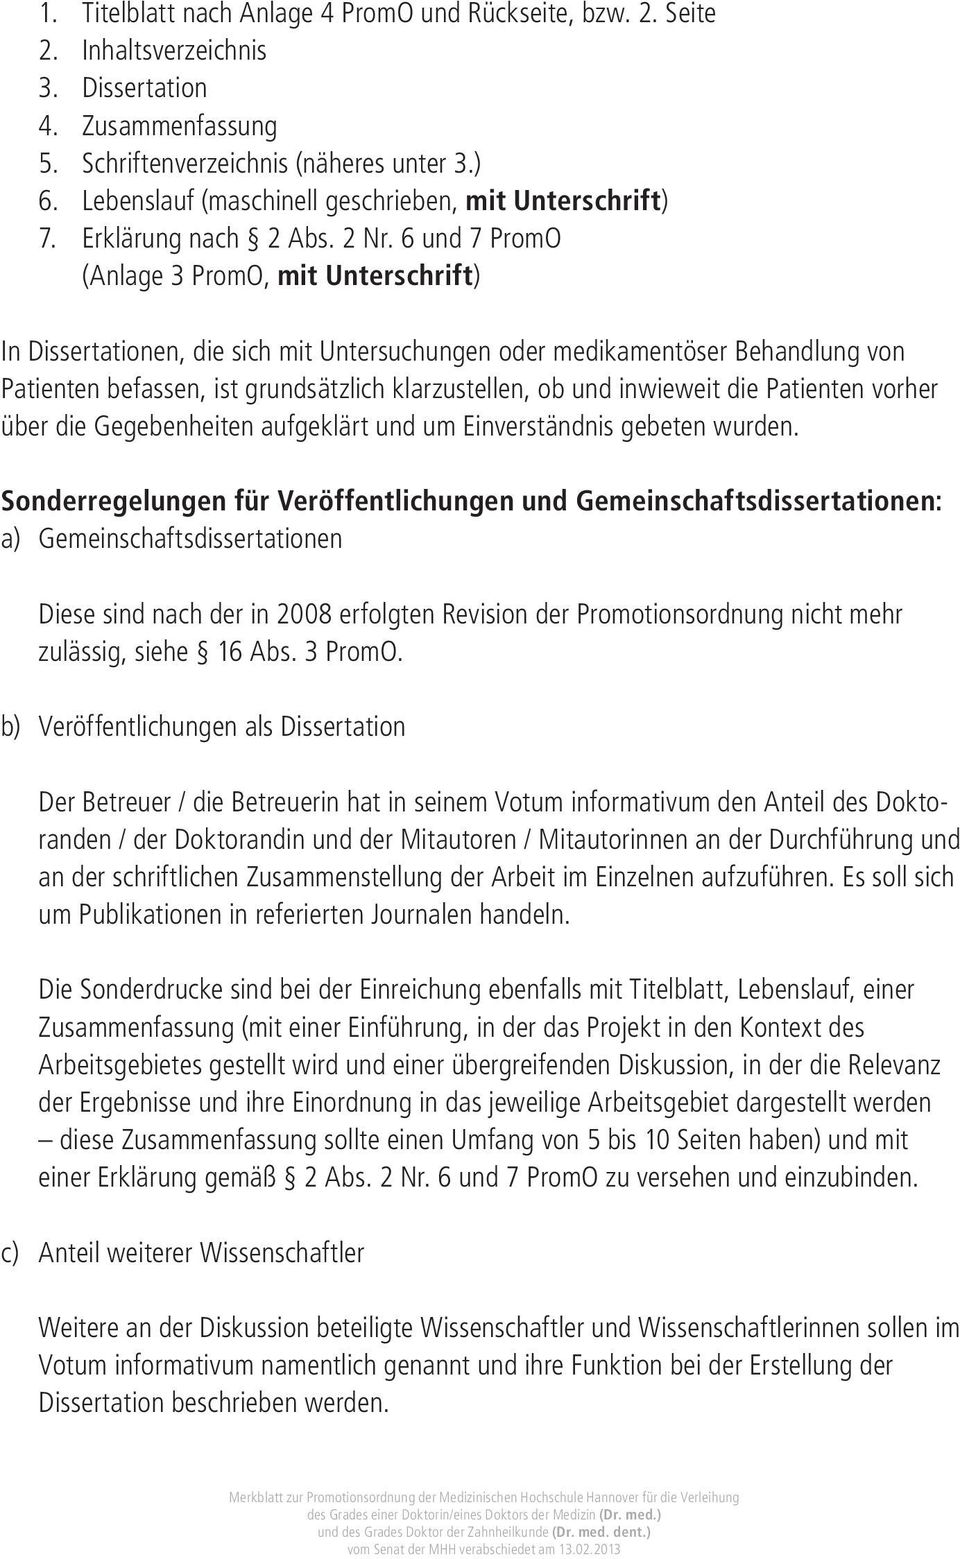 Merkblatt Zur Promotionsordnung Dr Med Dr Med Dent Pdf